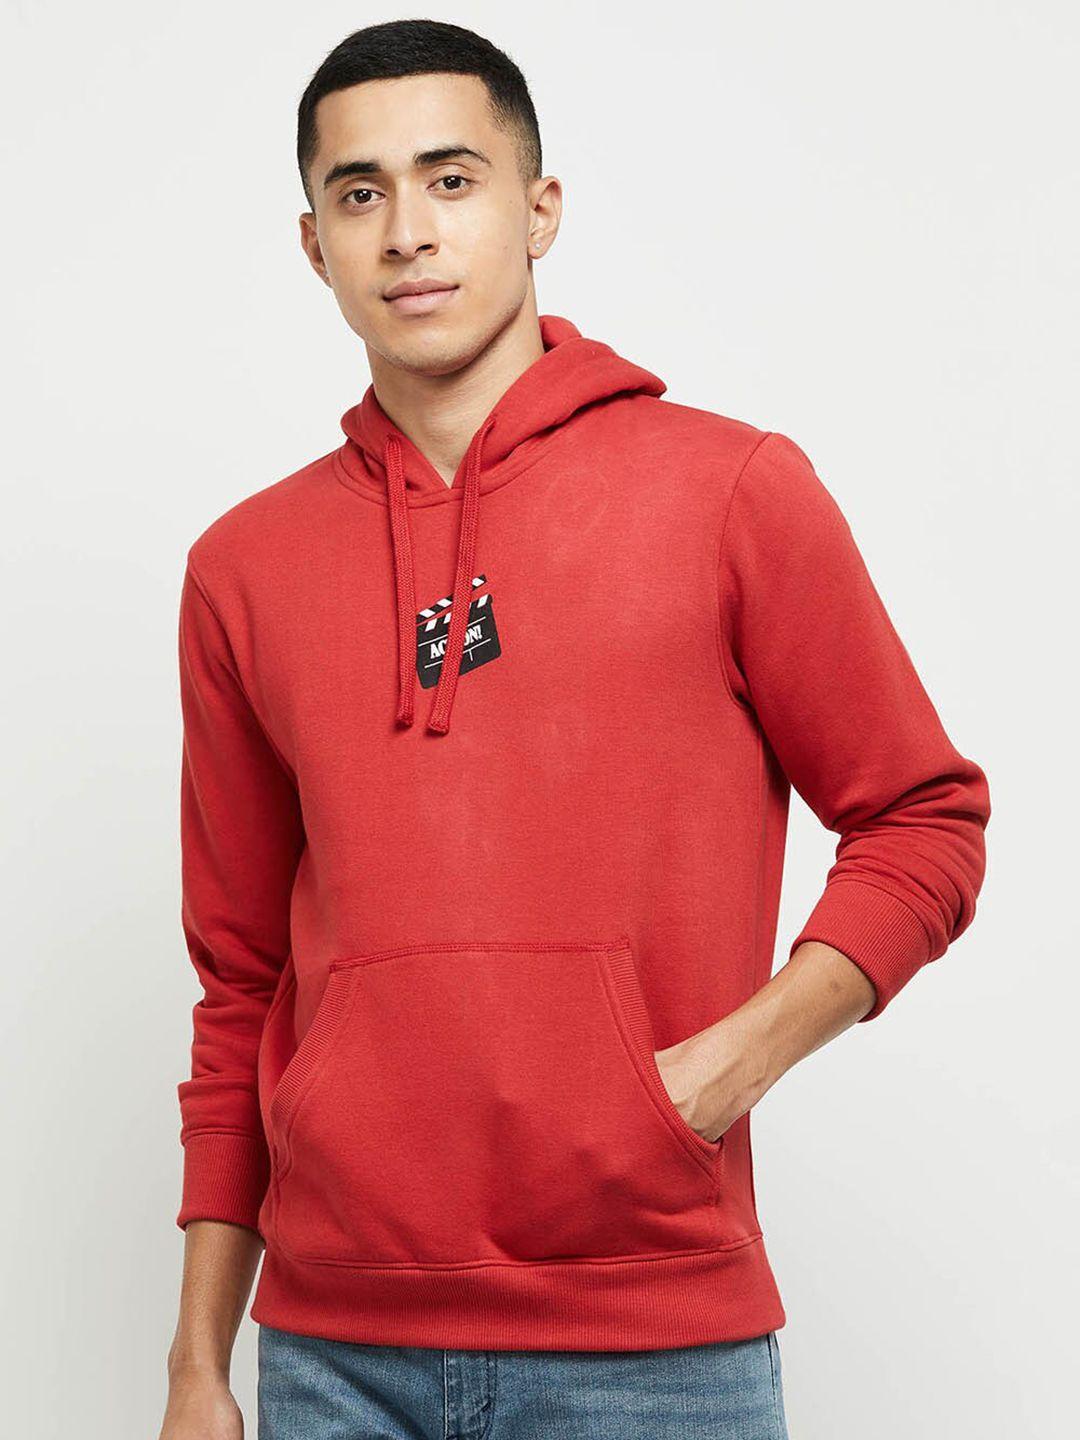 max-men-red-hooded-sweatshirt